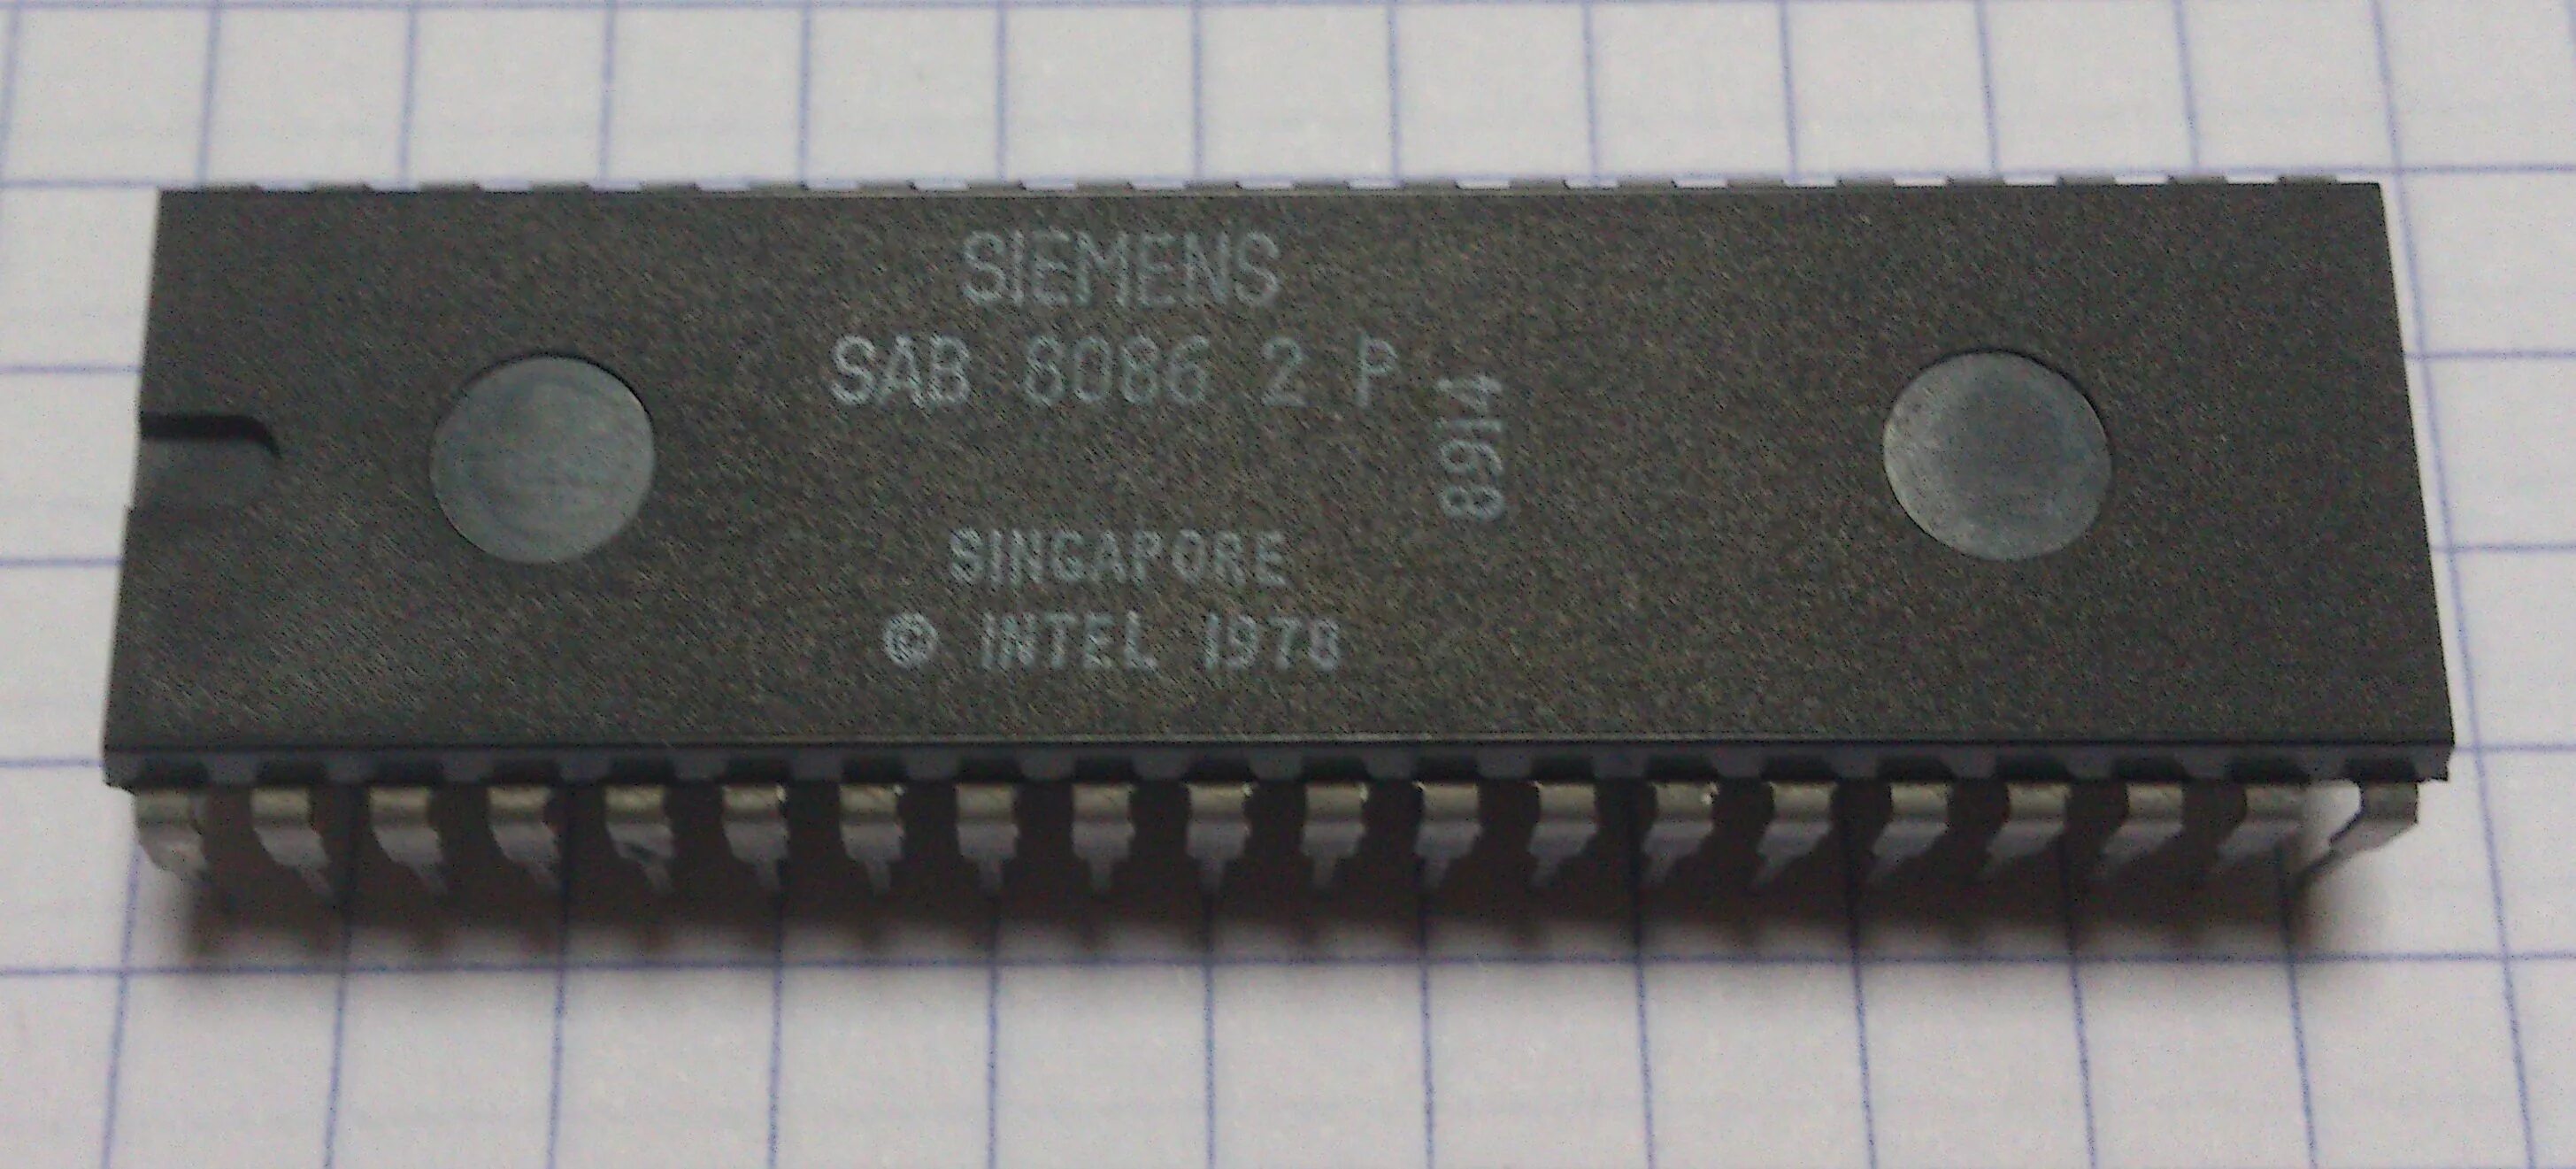 Интел 8088. Интел 8086. Процессор 8086. Siemens sab8086-p.